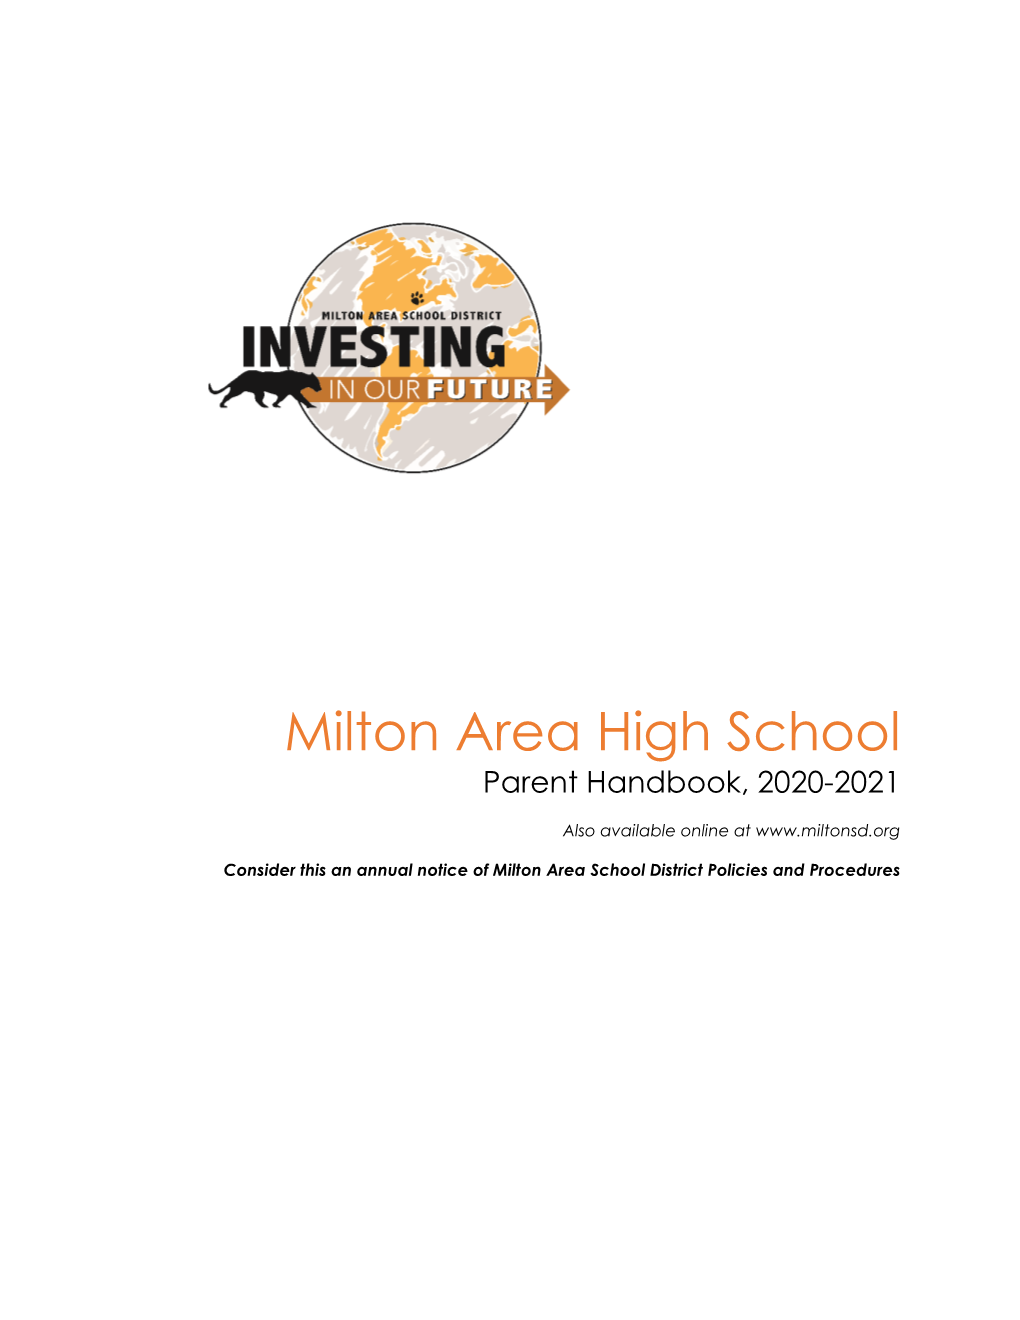 Milton Area High School Parent Handbook, 2020-2021